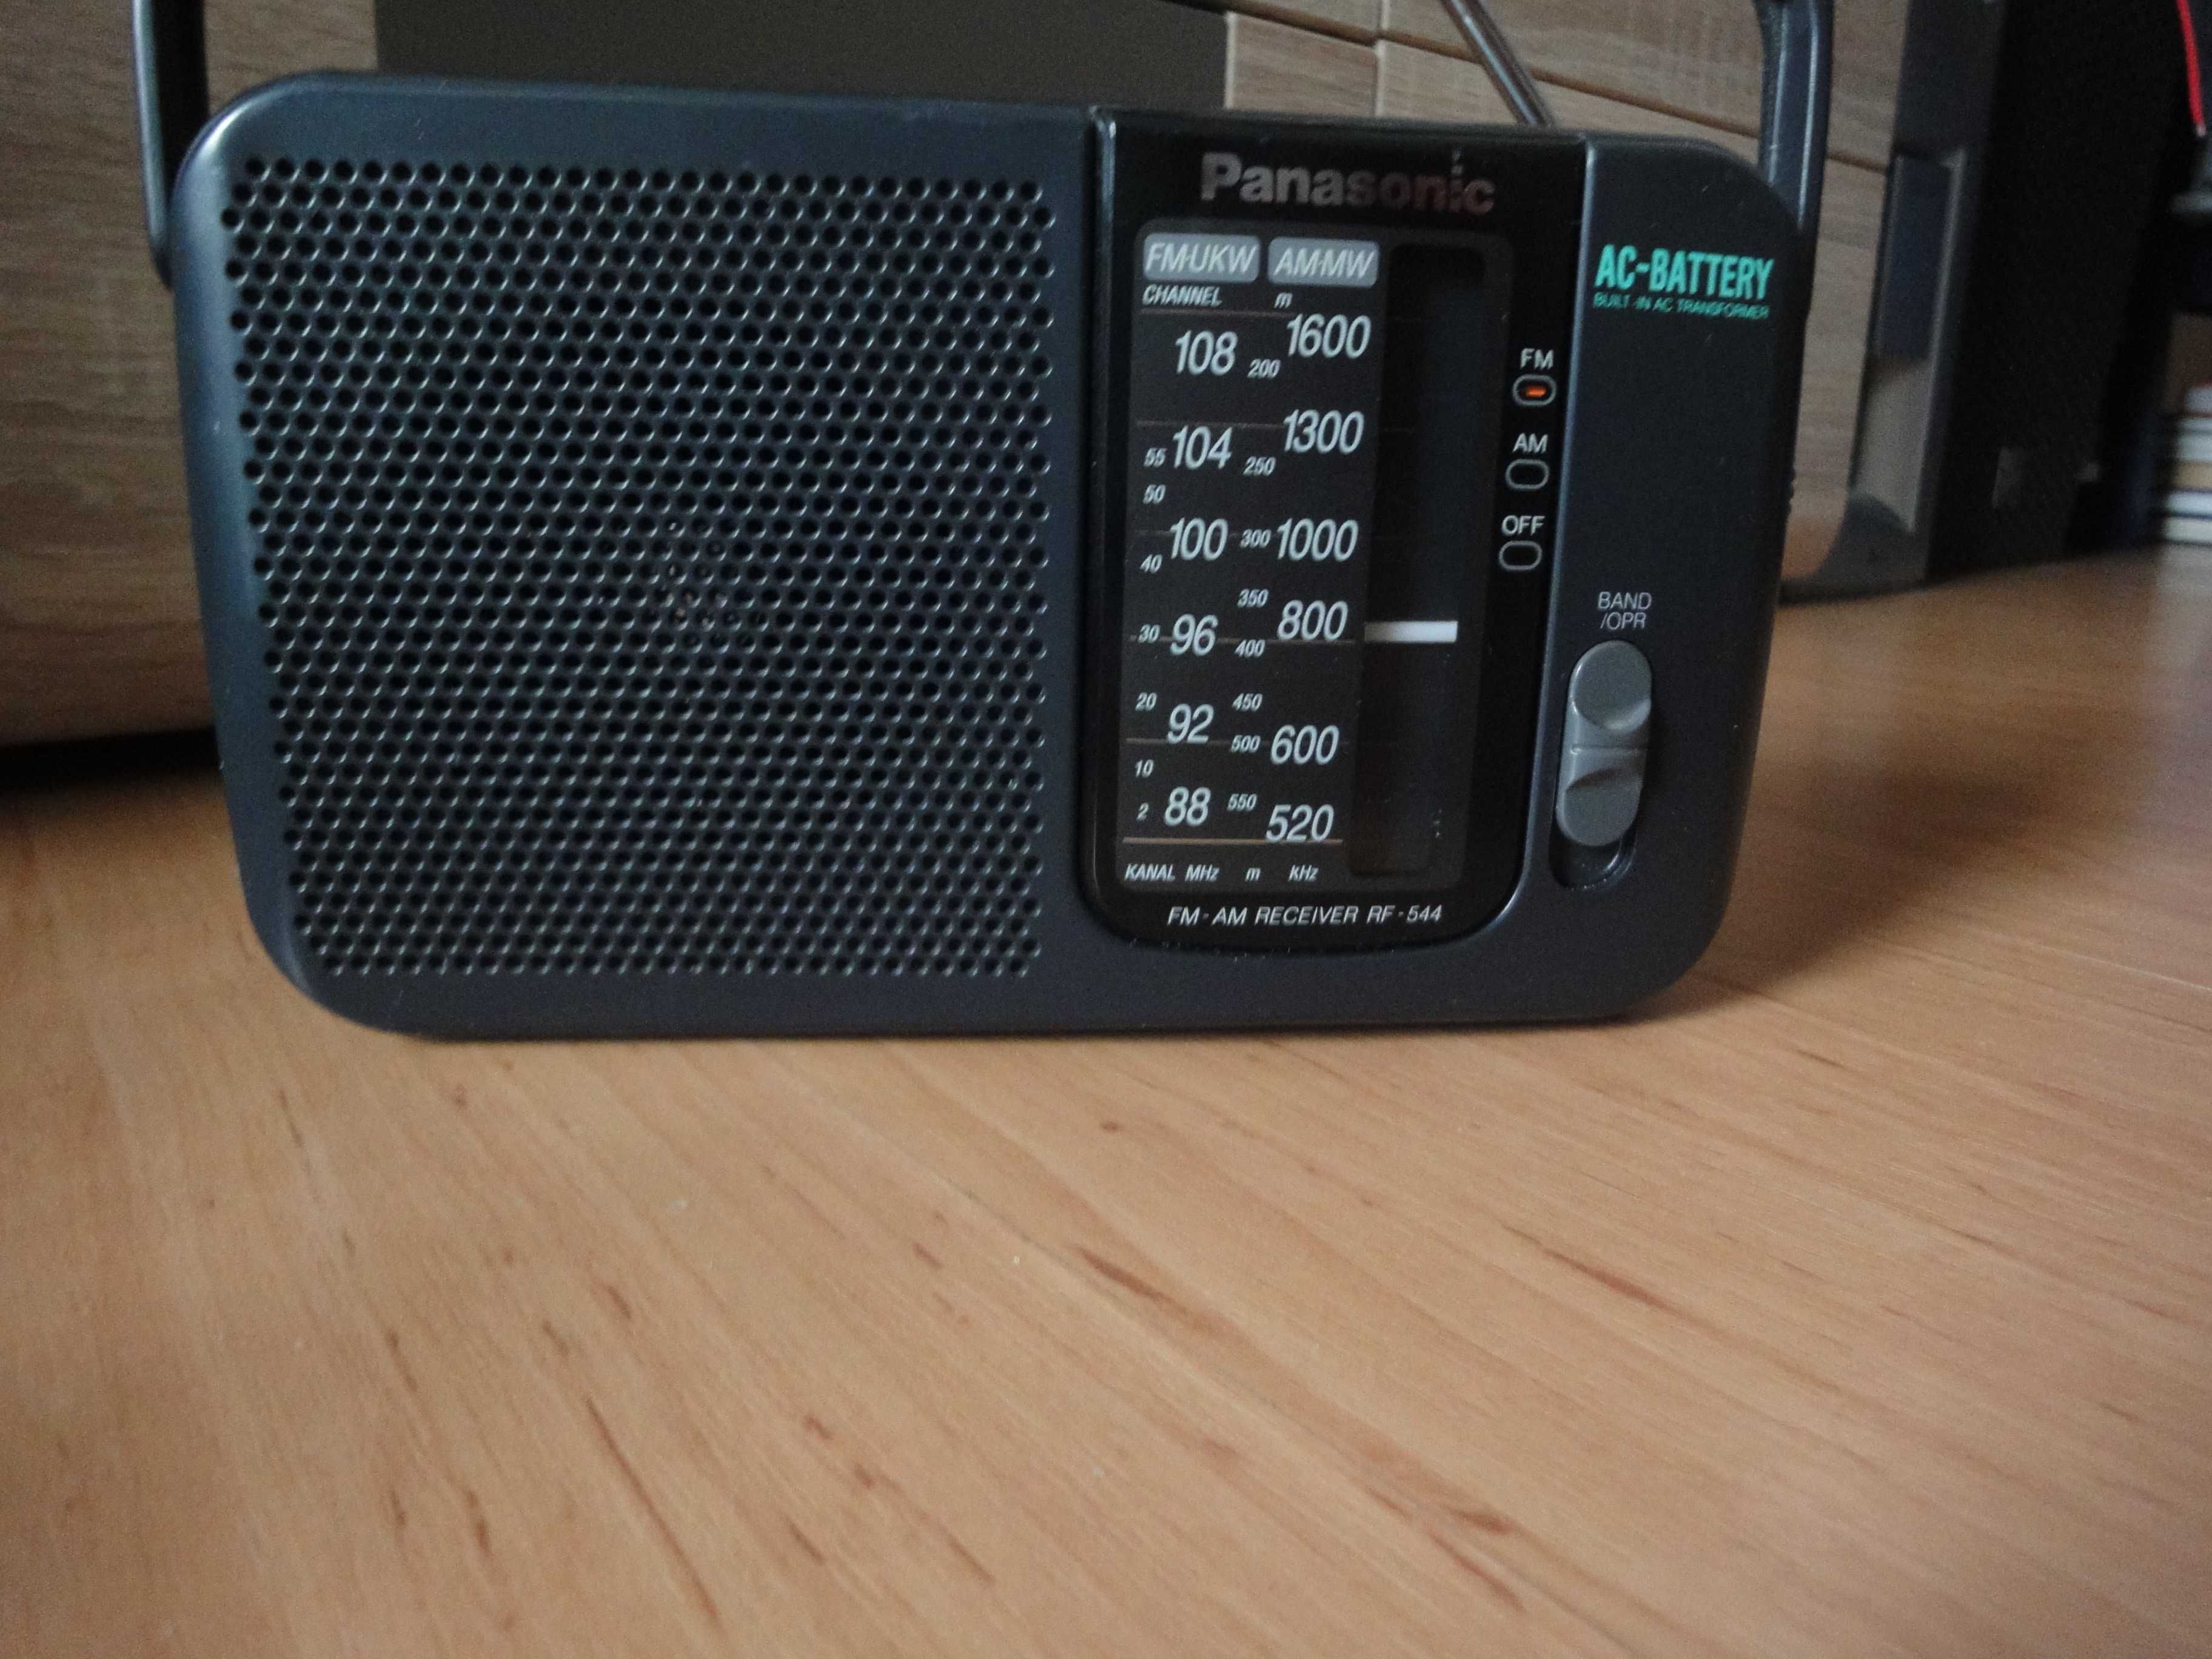 Radio Panasonic -zadbane,idealne do kuchni lub pracy